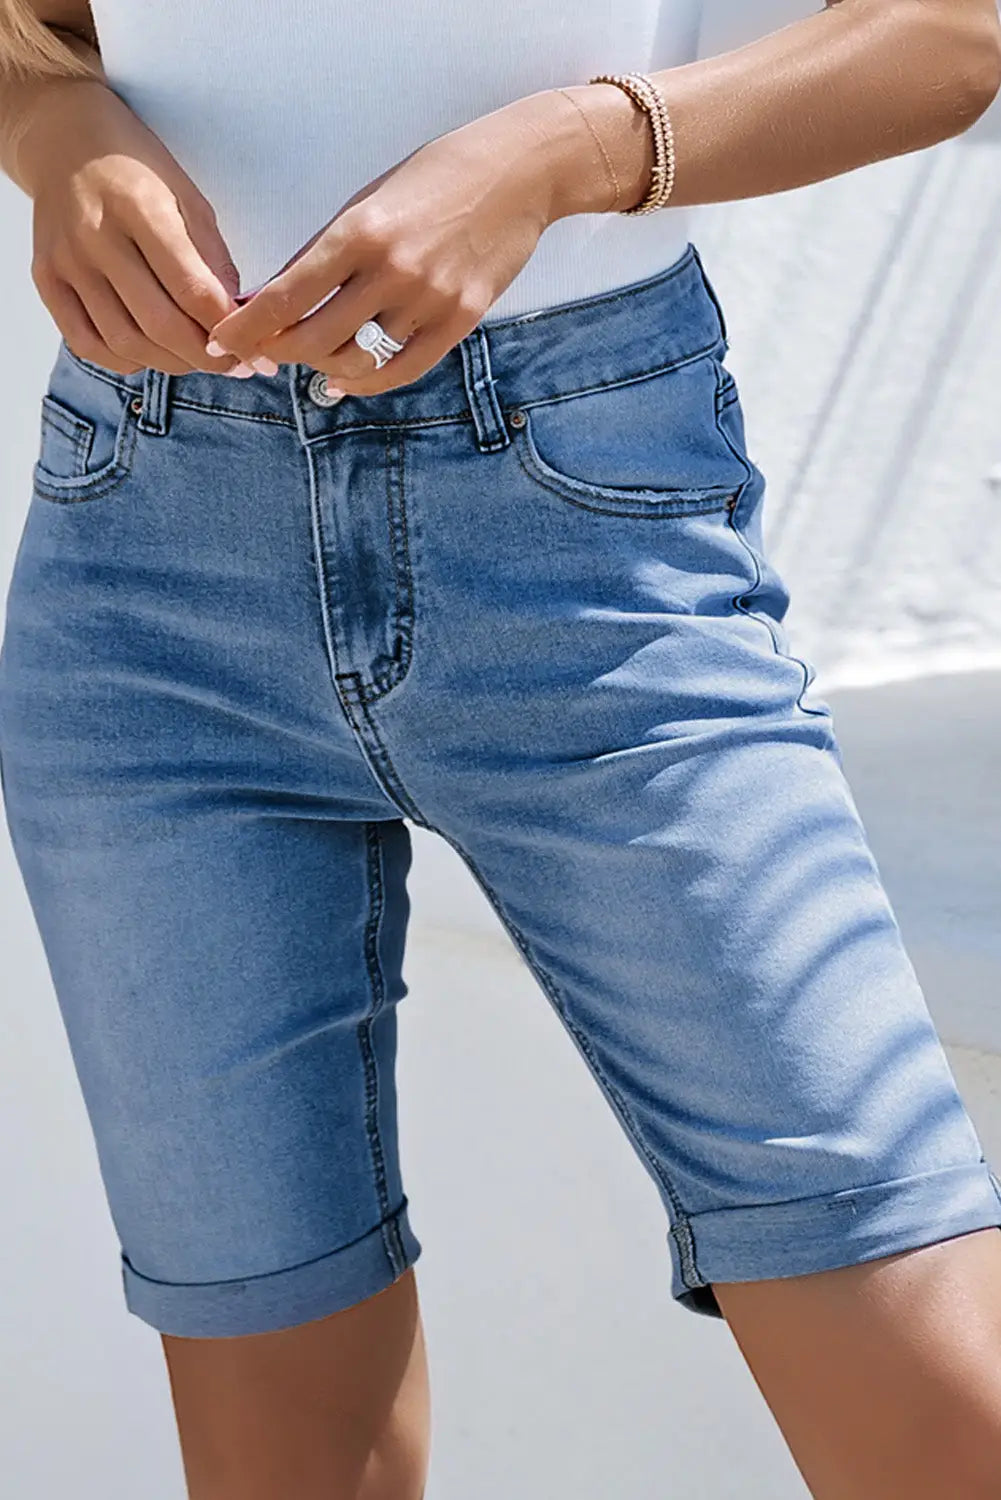 Sky blue acid wash roll-up edge bermuda short jeans - denim shorts